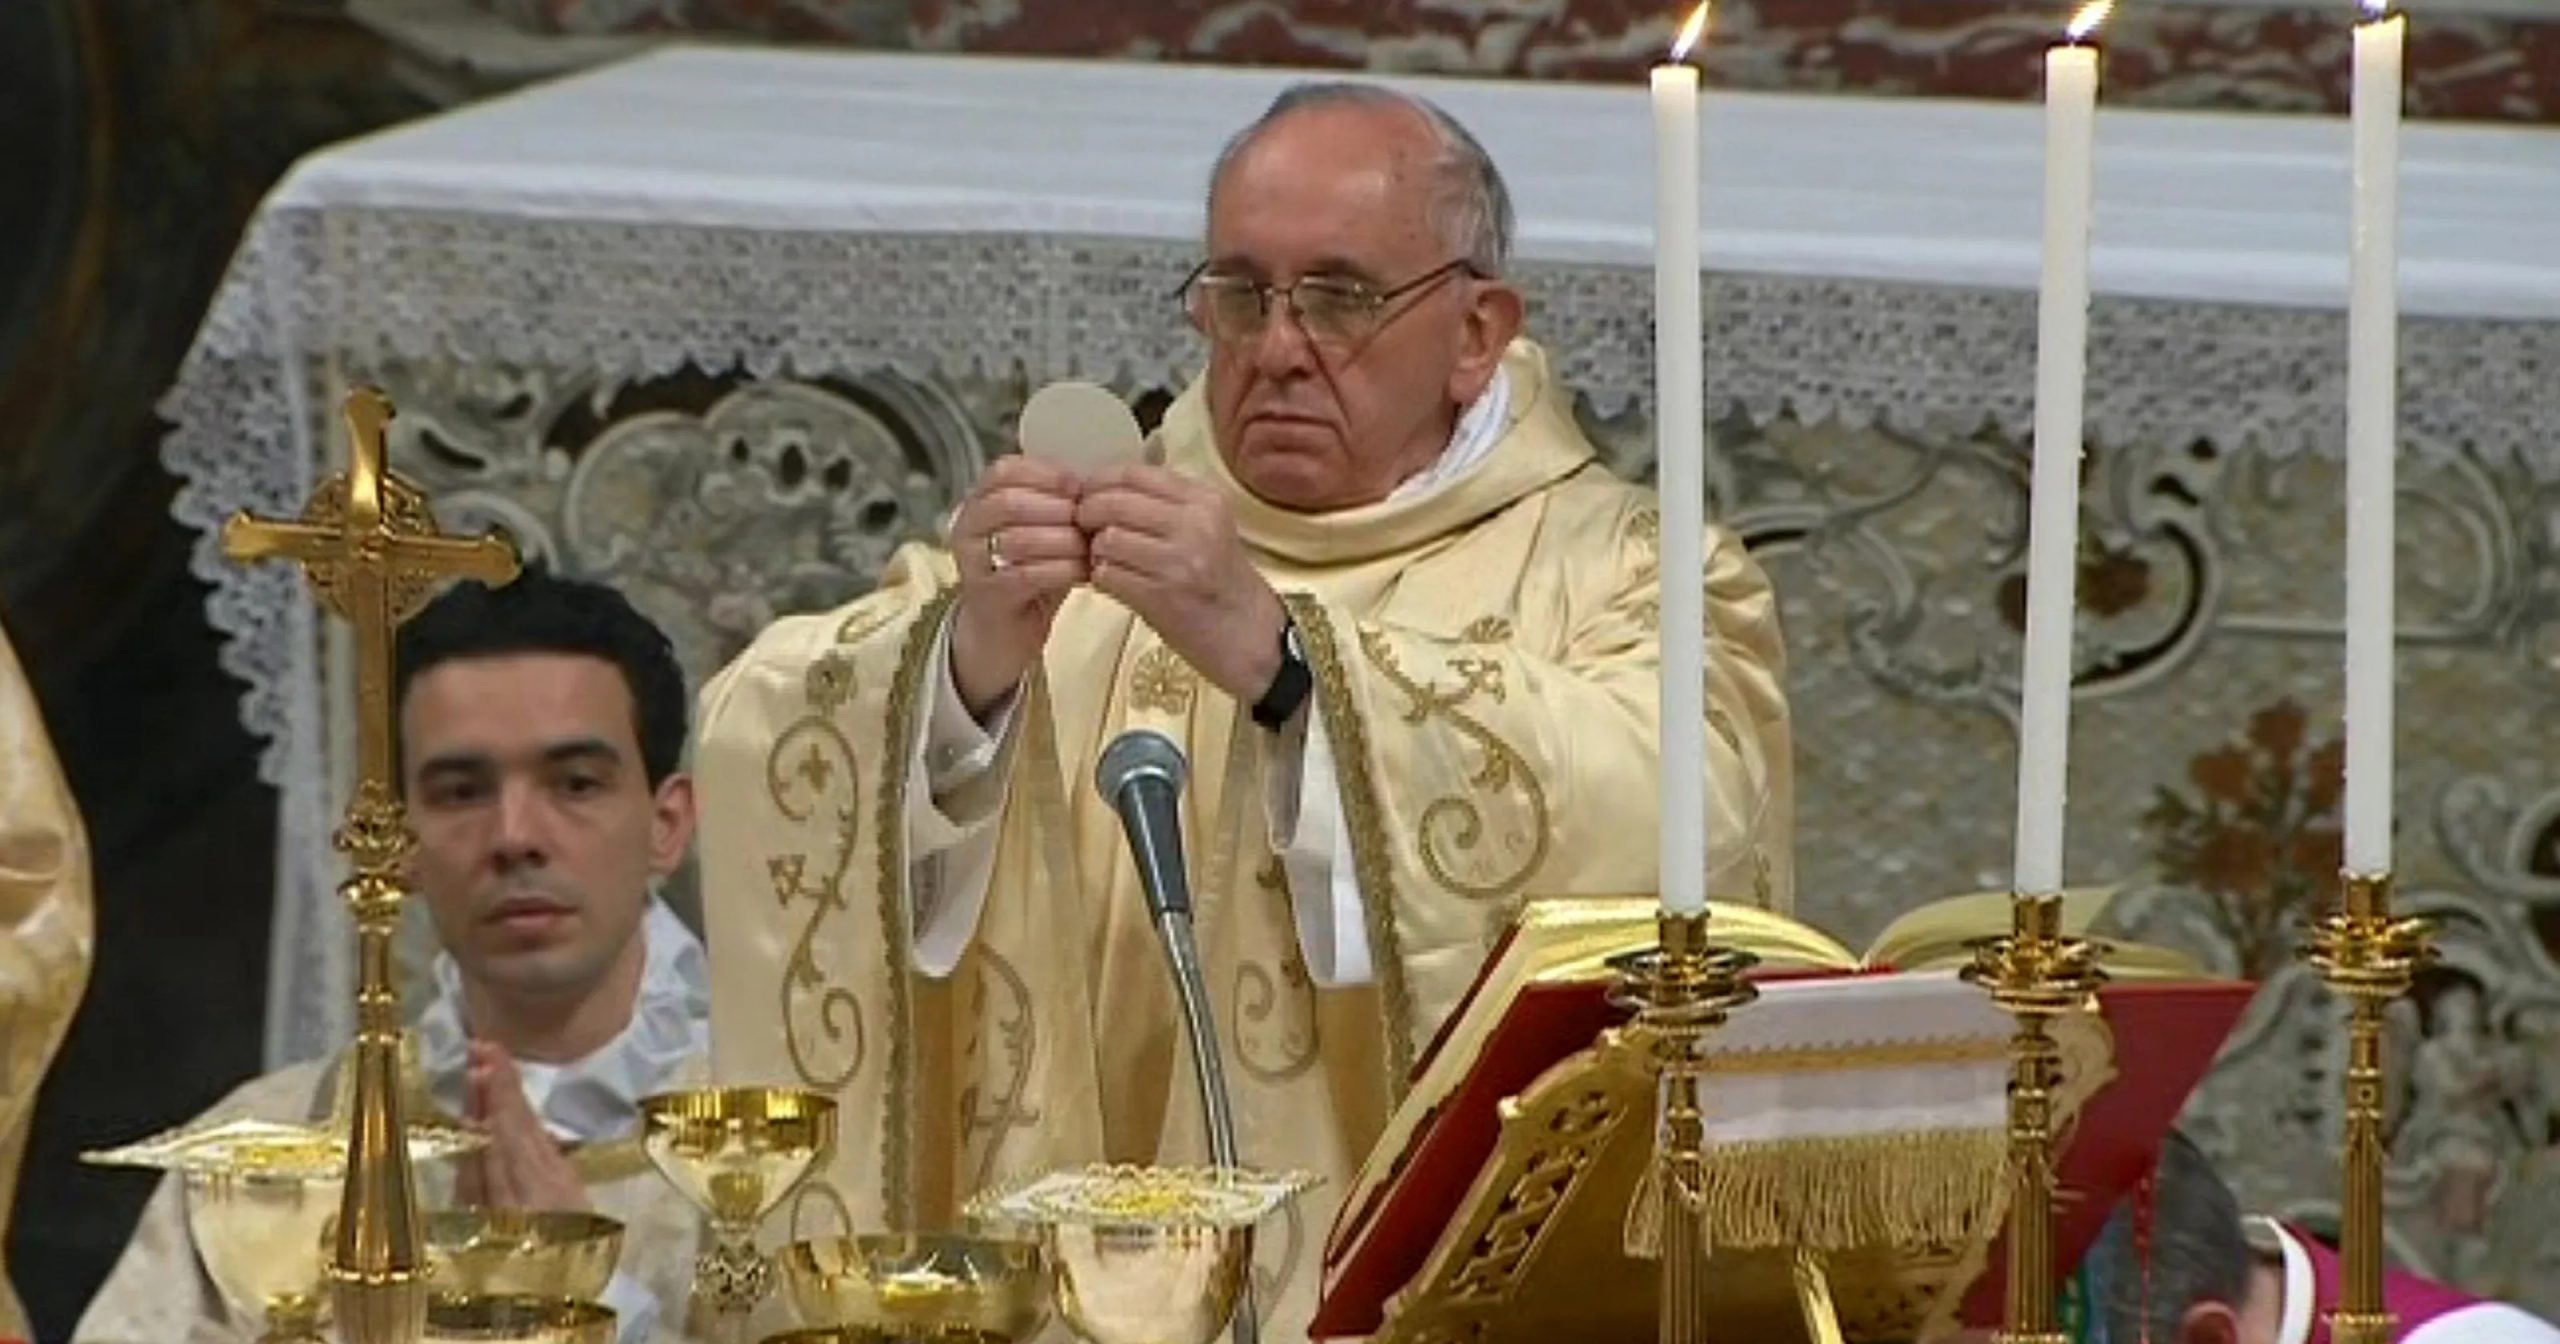 pope francis conducting mass